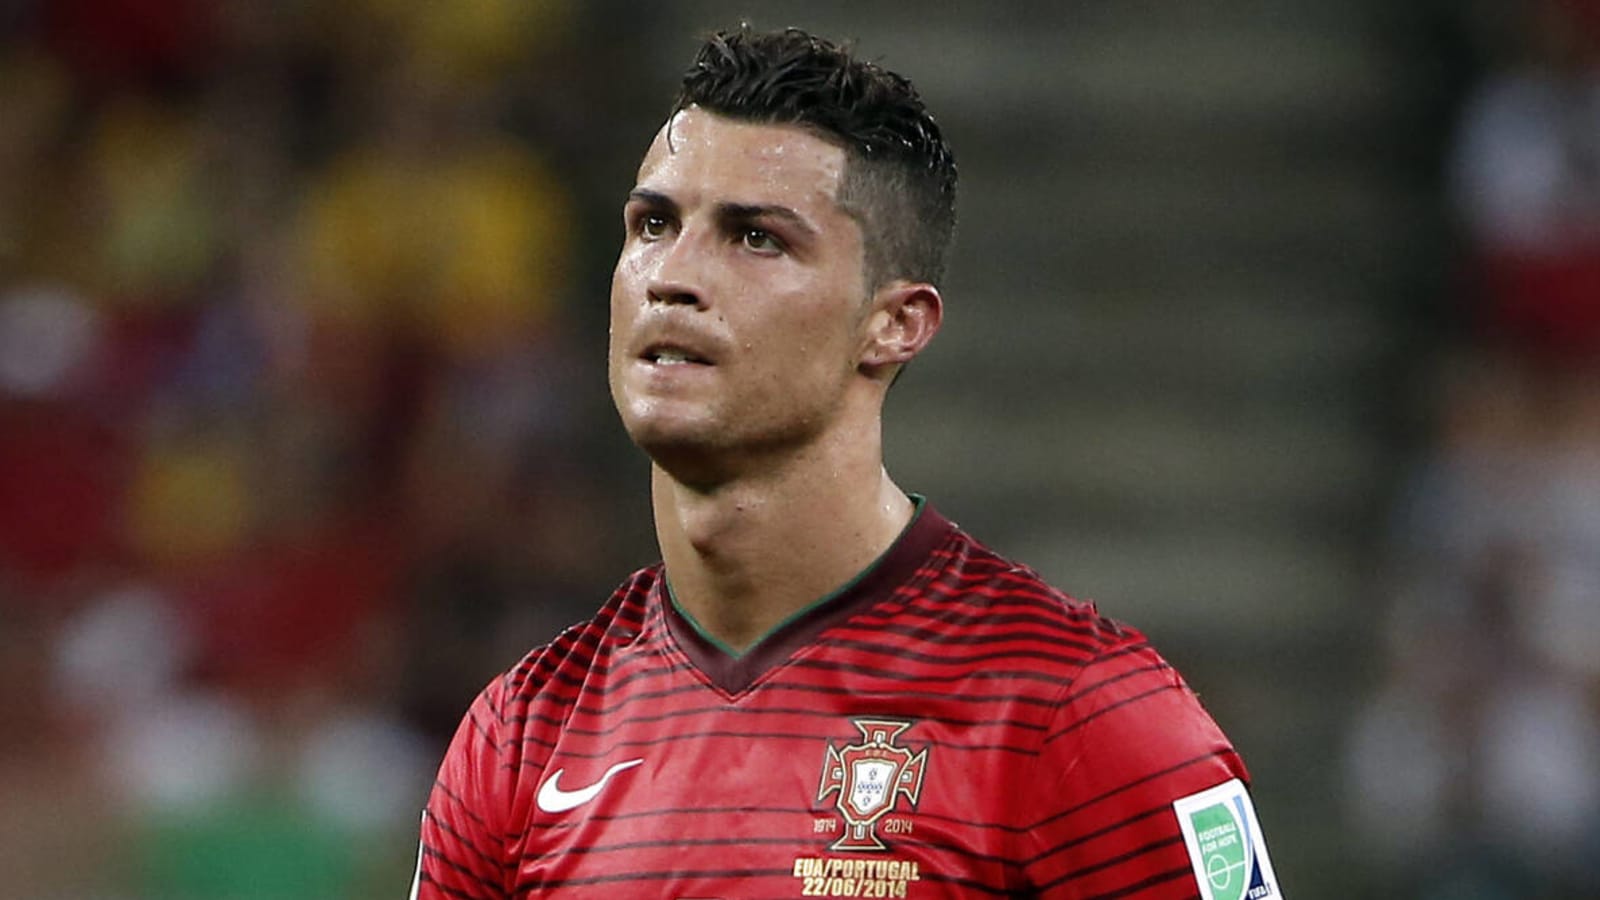 No Champions League club made substantial approach for Ronaldo?